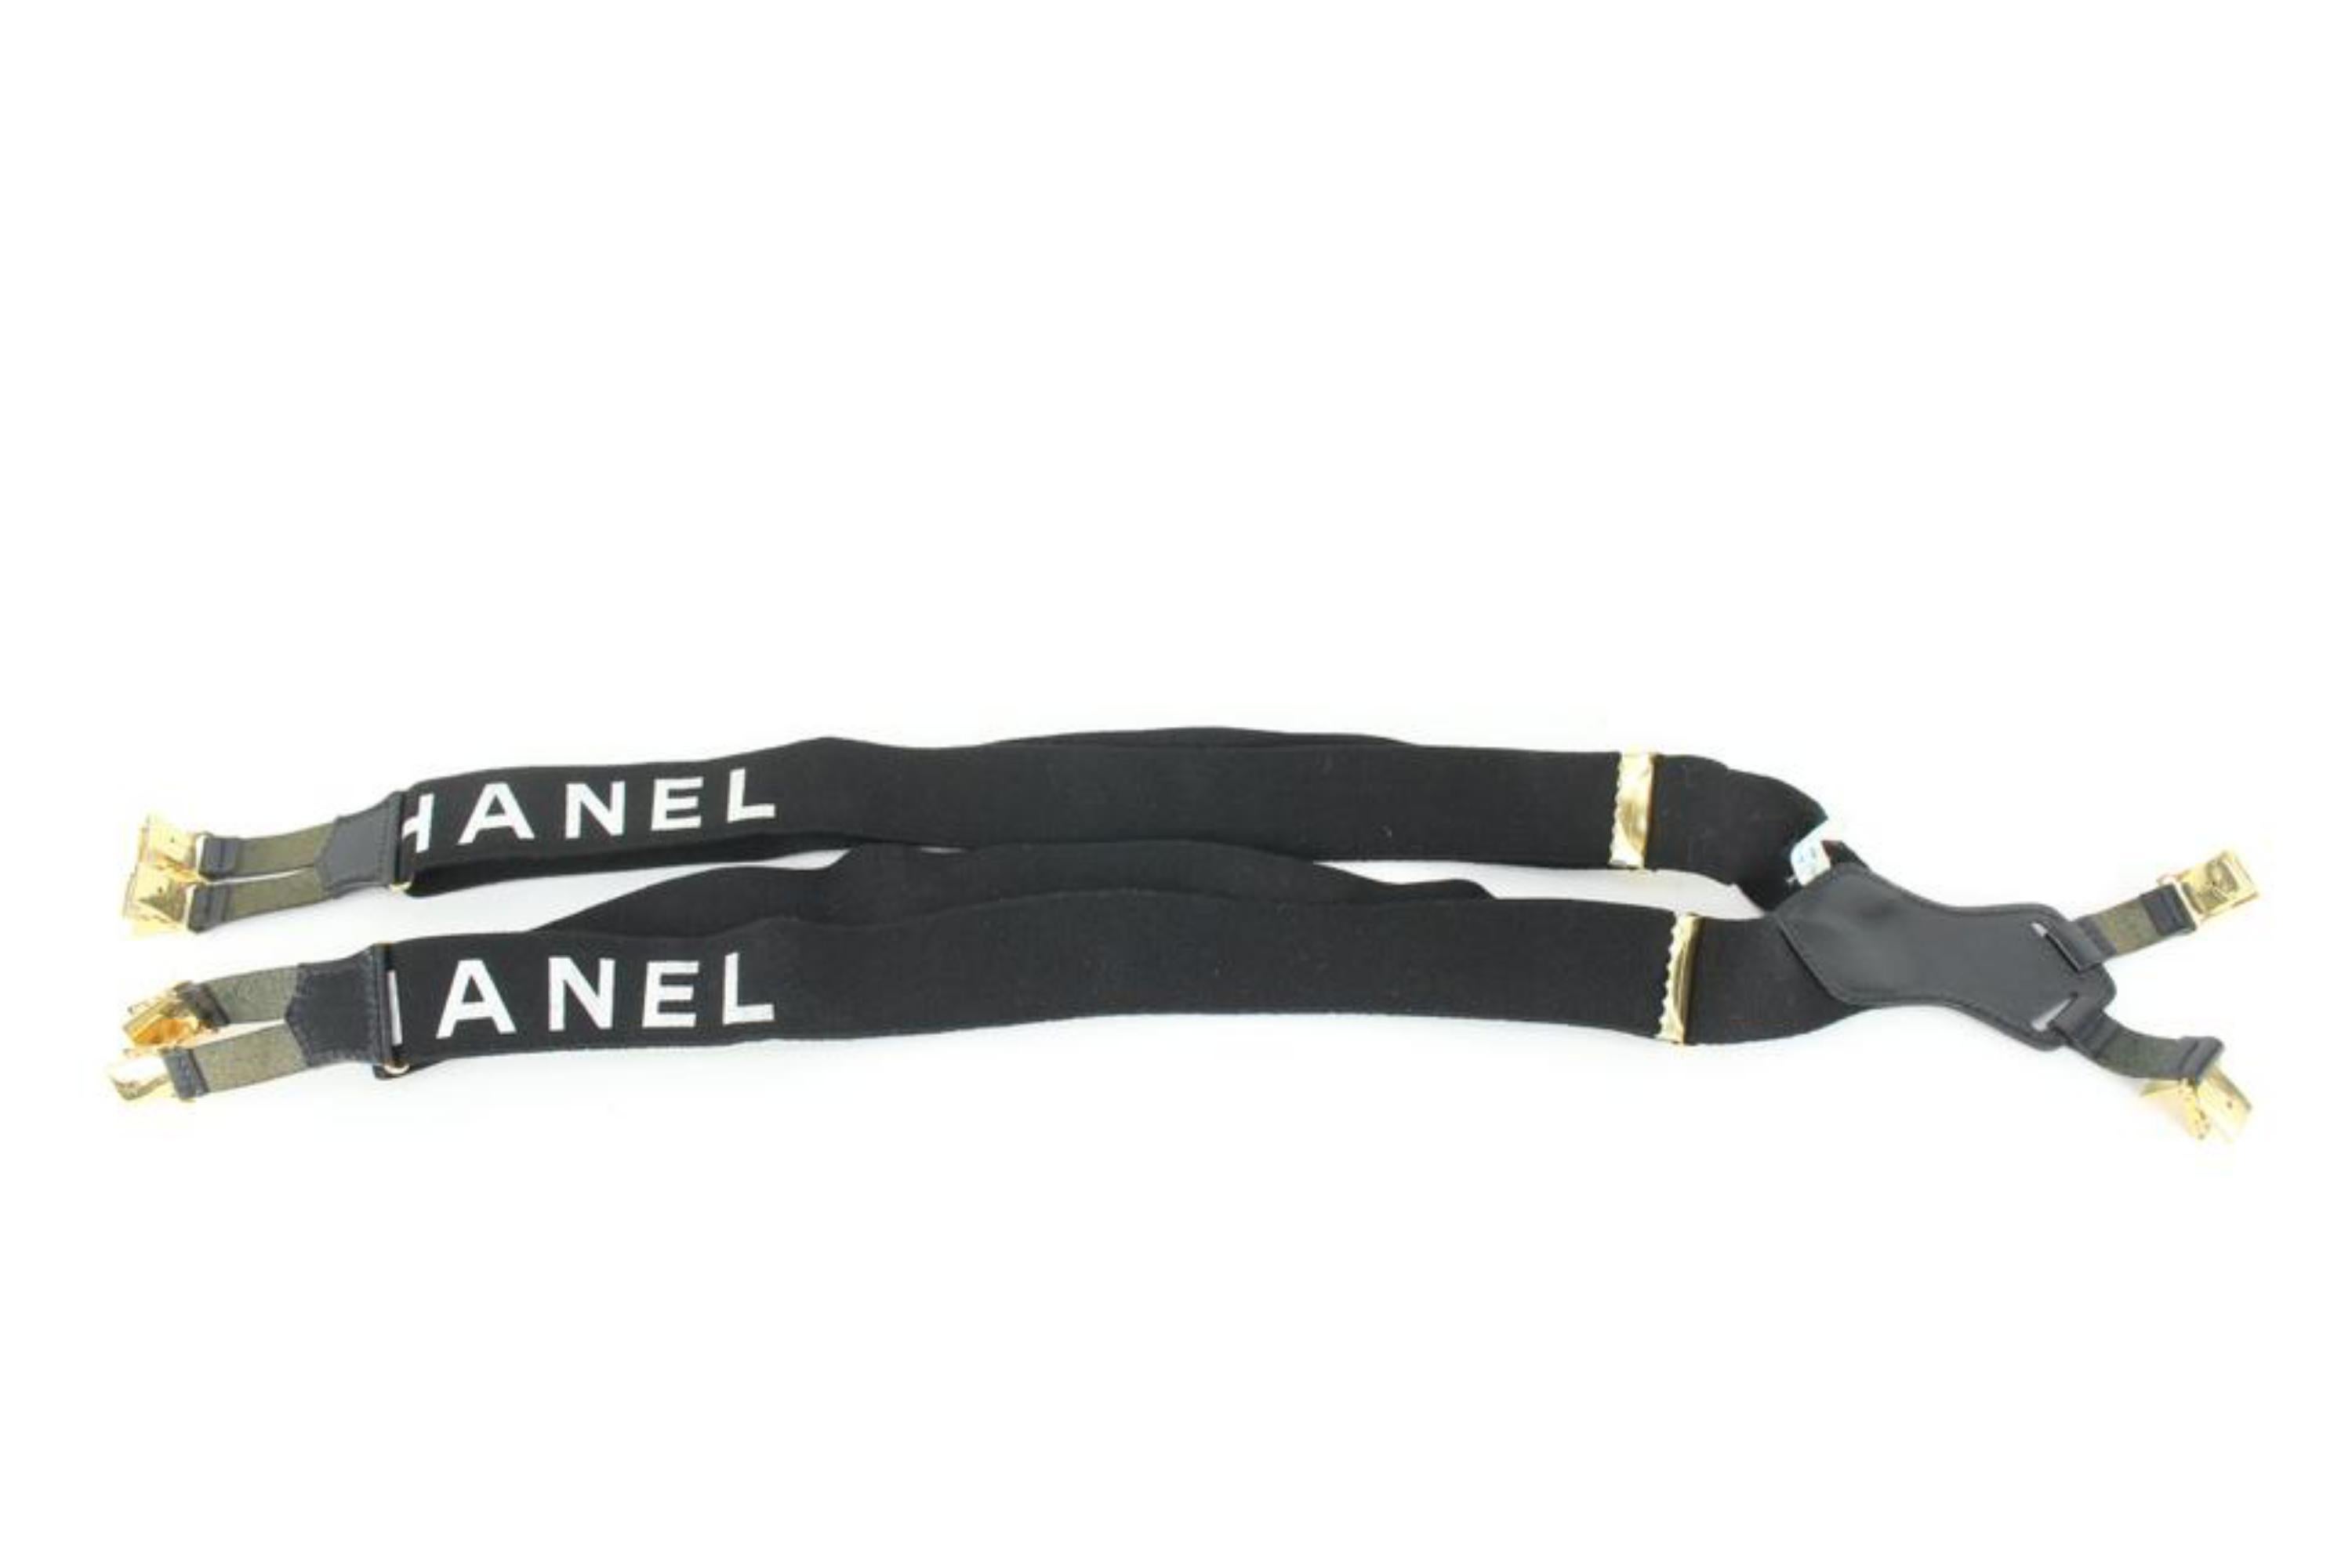 Chanel Runway Rare Vintage Black x White Suspenders 14cz510s 1